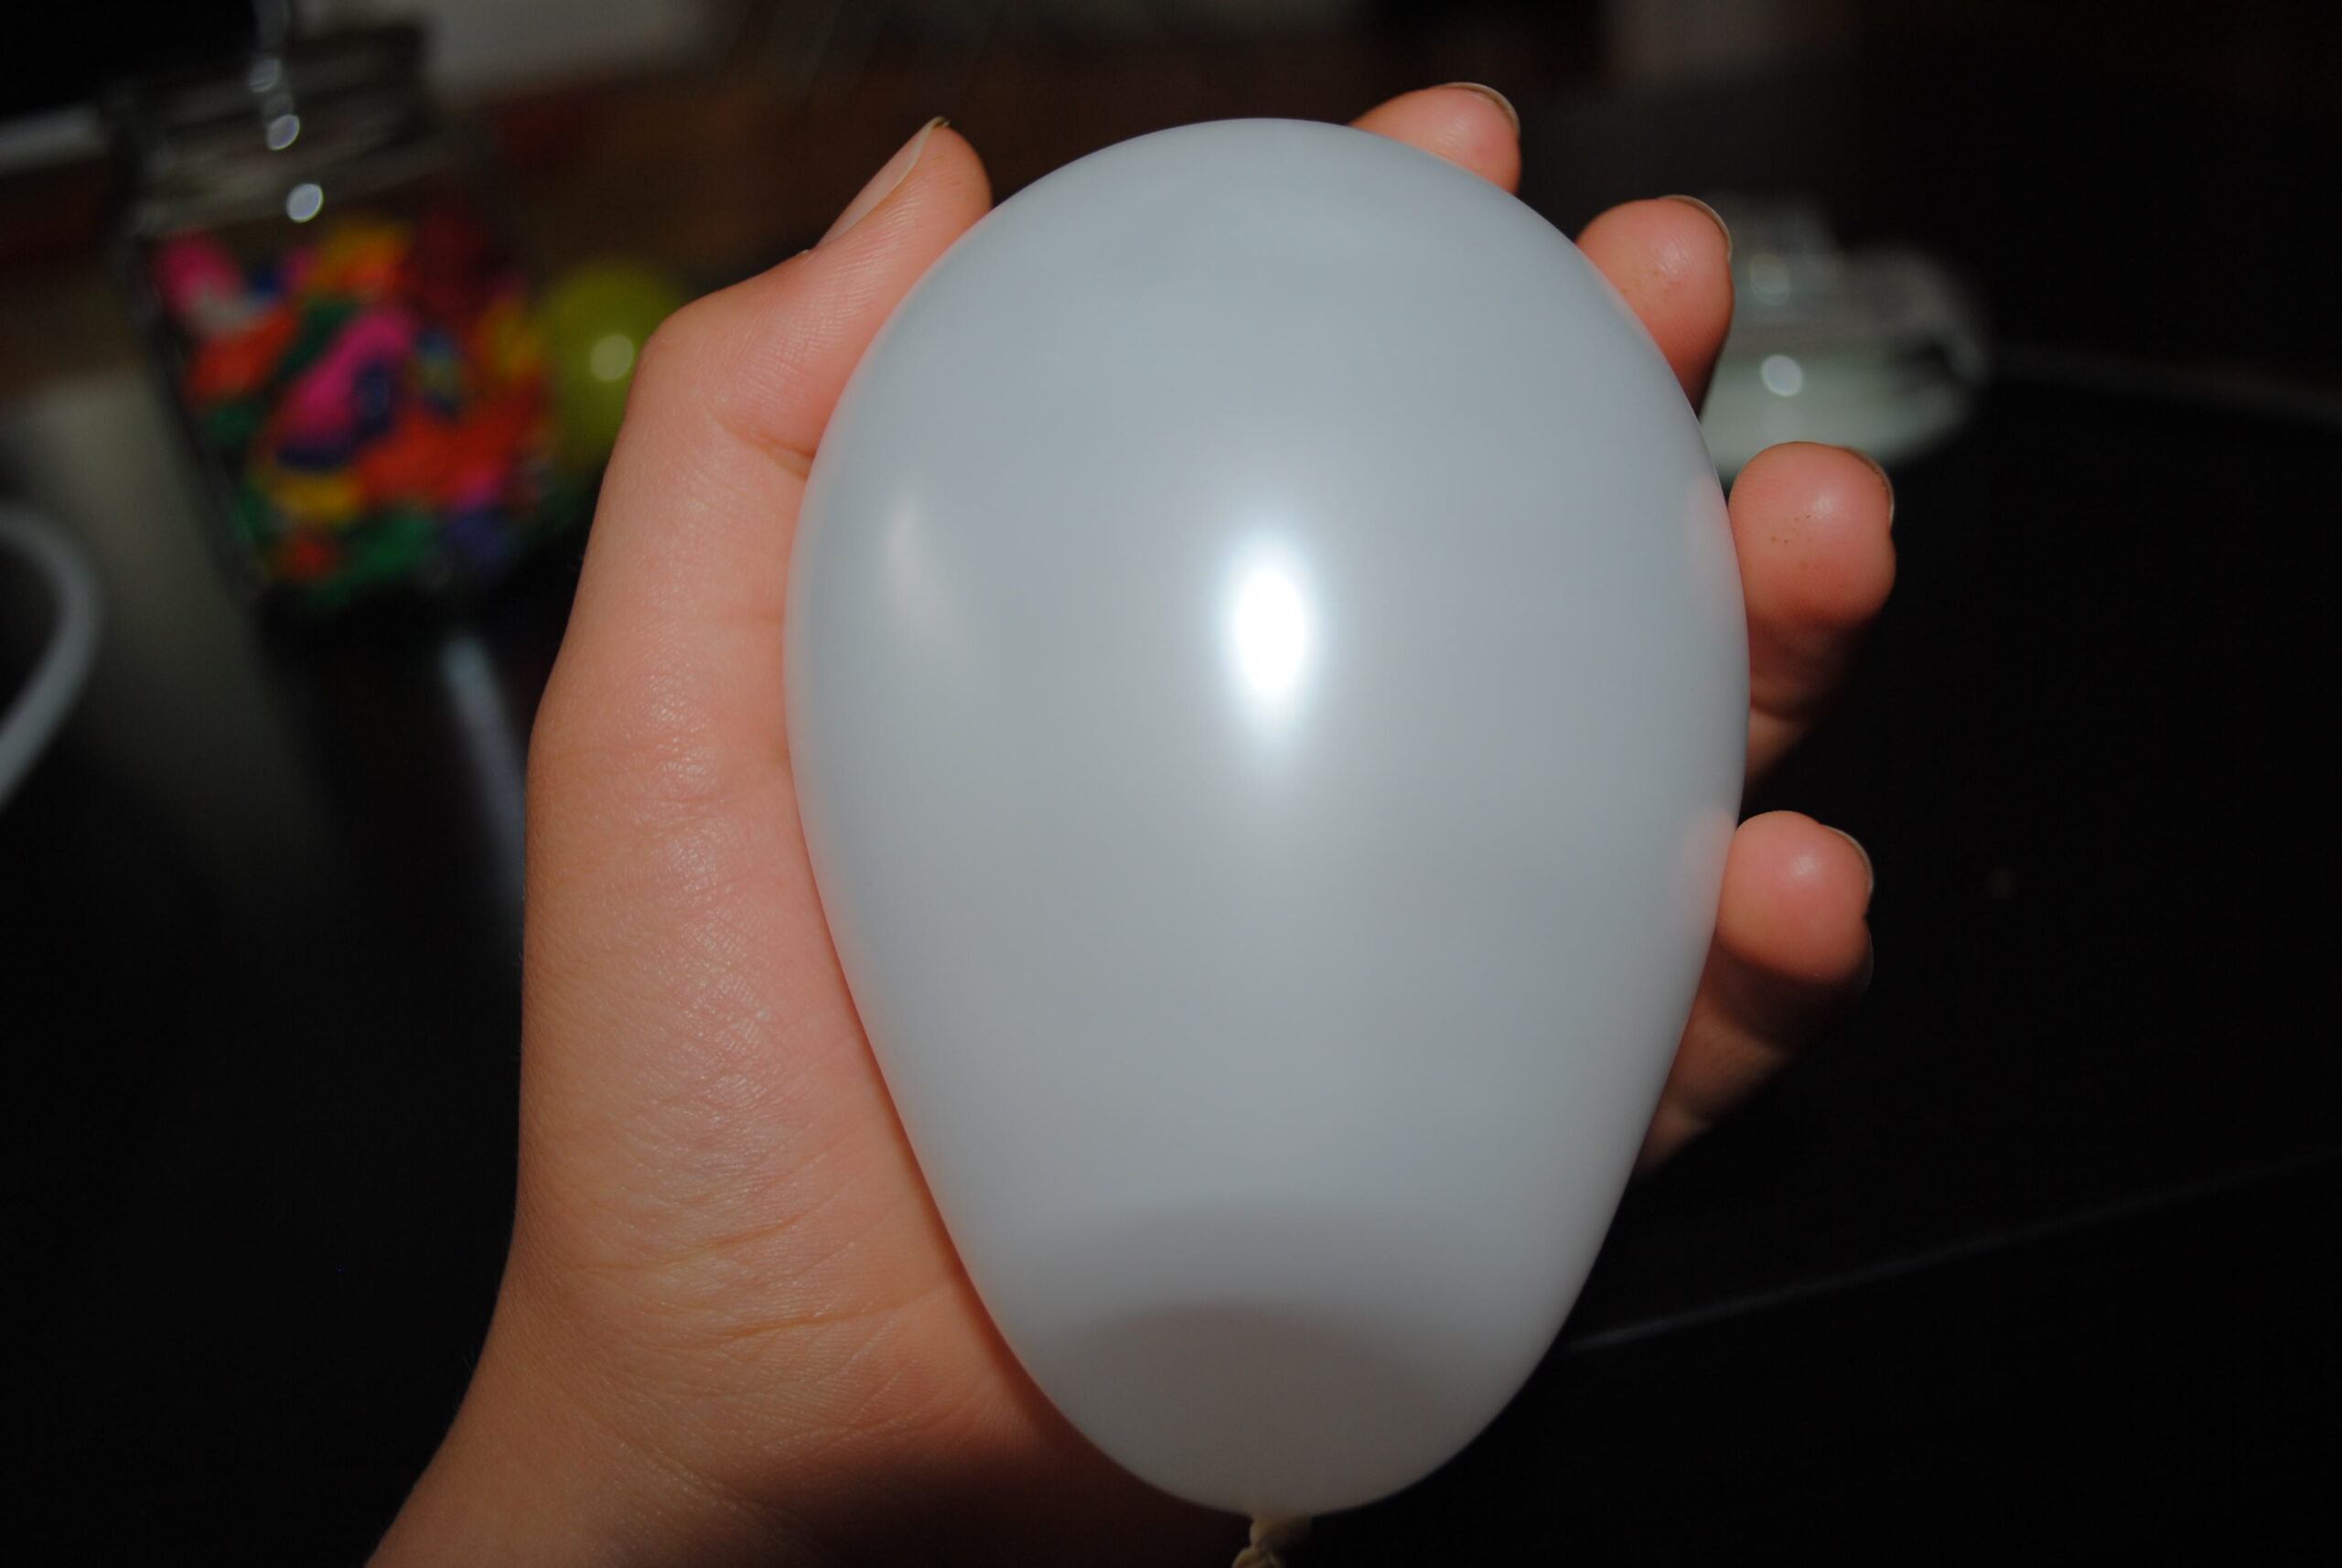 A person holding a white balloon